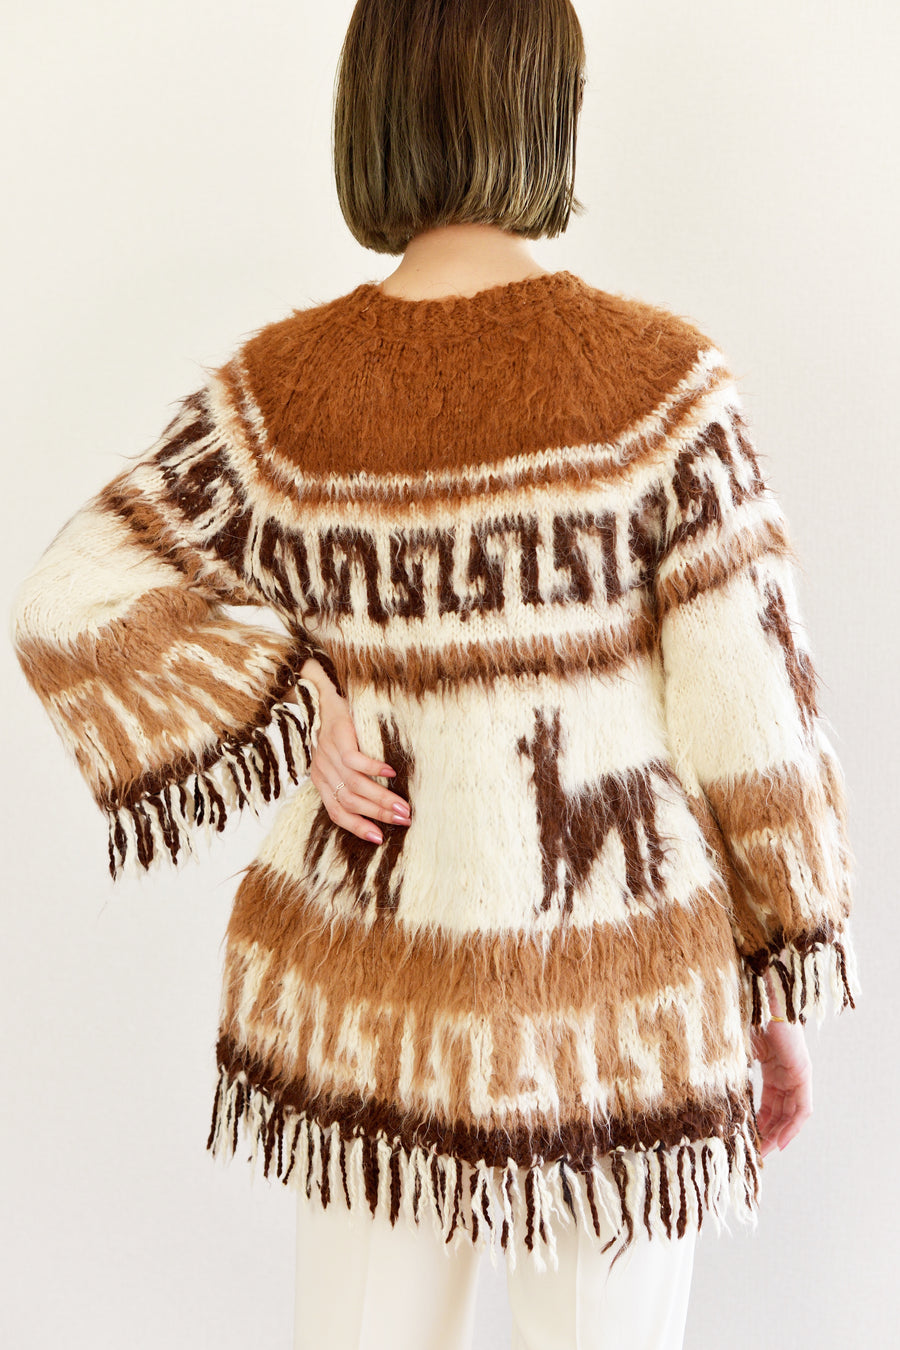 Vintage 1970's Alpaca Shaggy Fringes Sweater